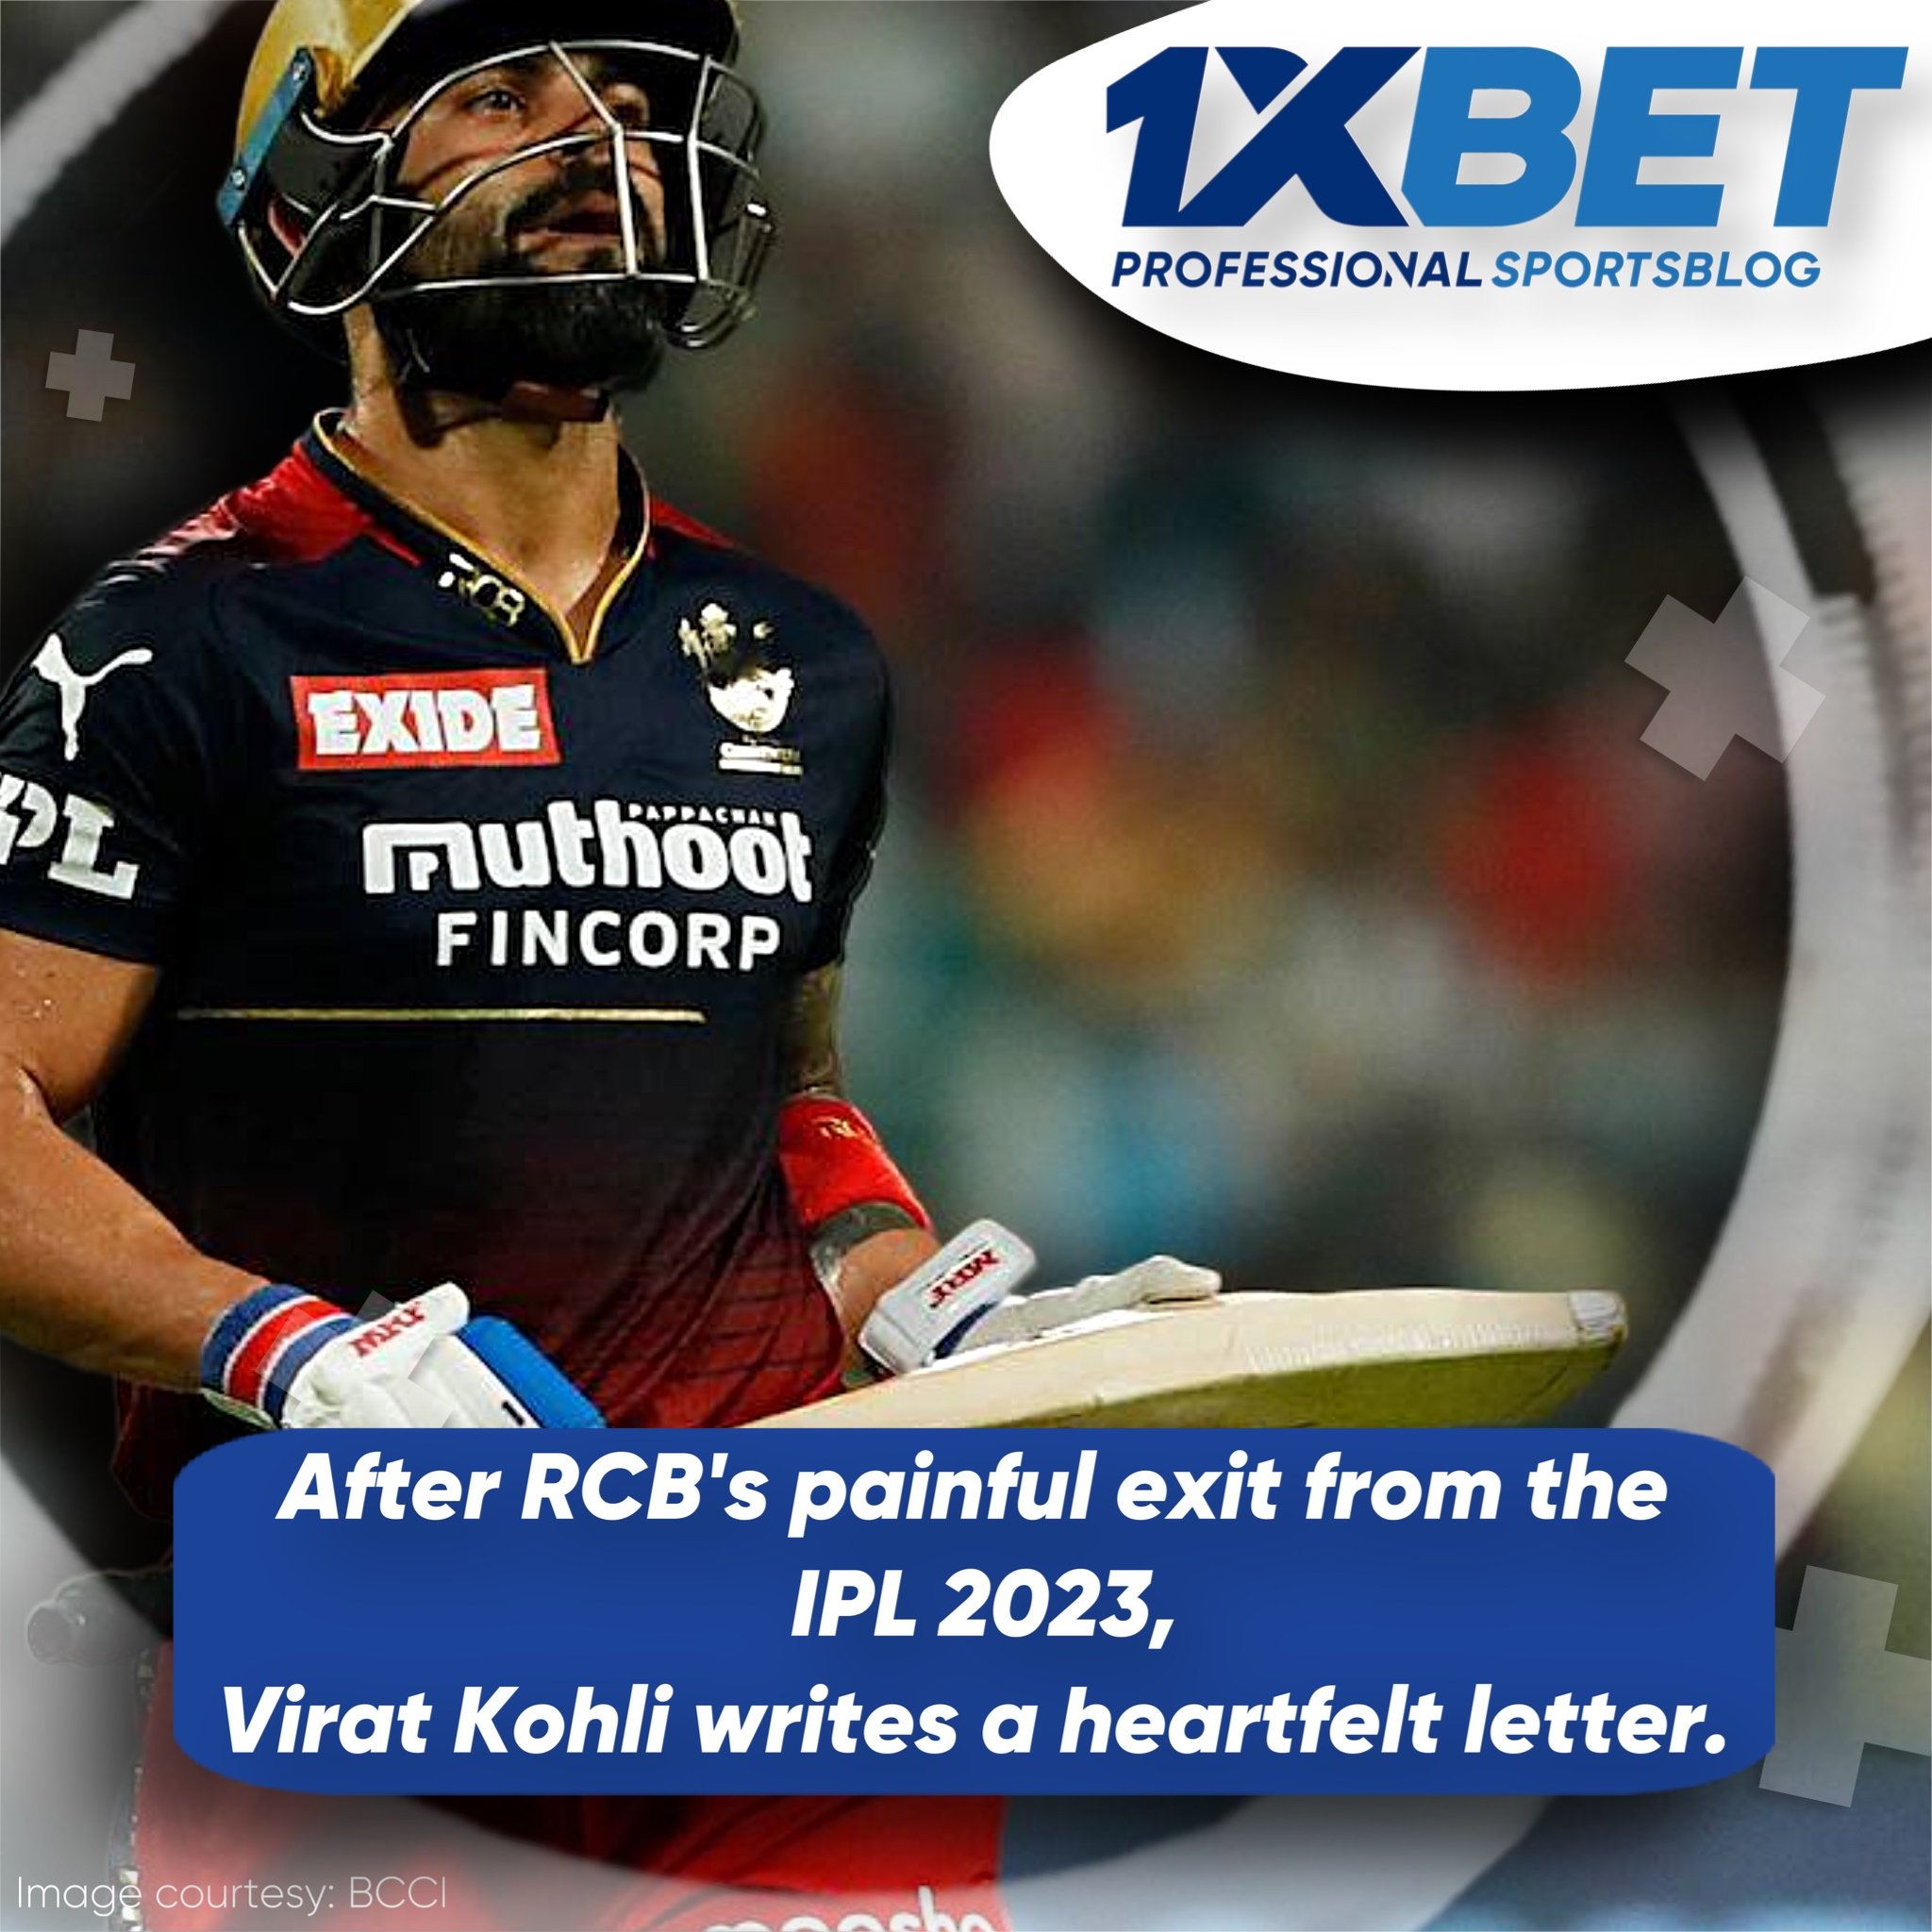 After RCB's painful exit from the IPL 2023, Virat Kohli writes a heartfelt letter.